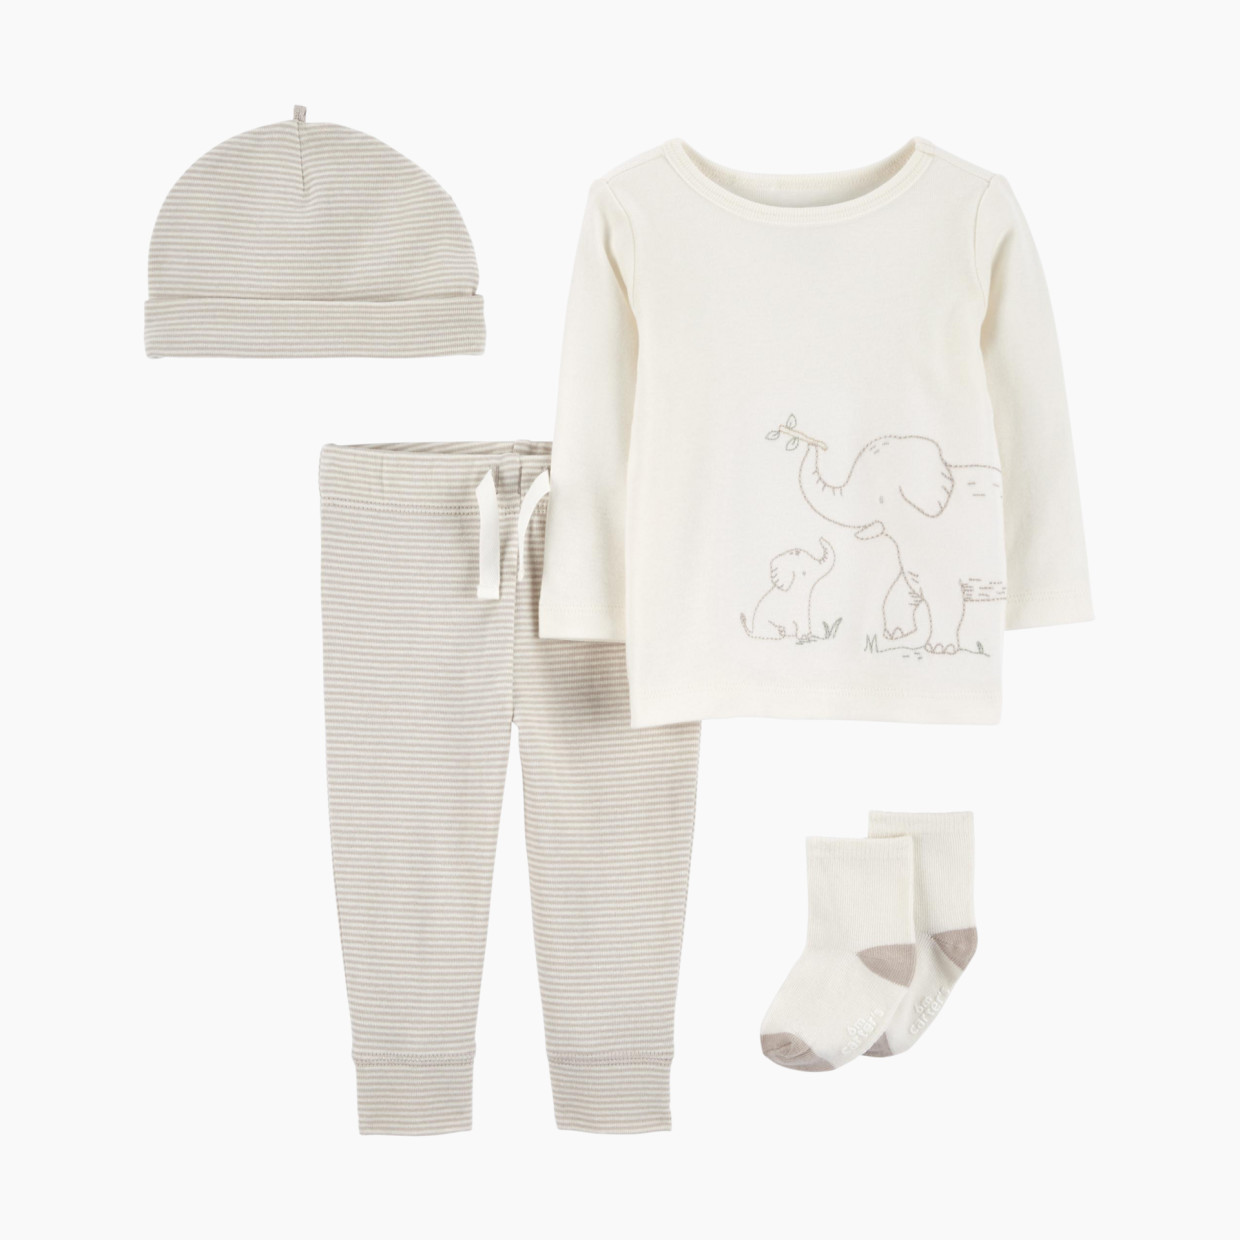 Carter's 4-Piece Elephant Outfit Set - Grey/Ivory, 3 M.